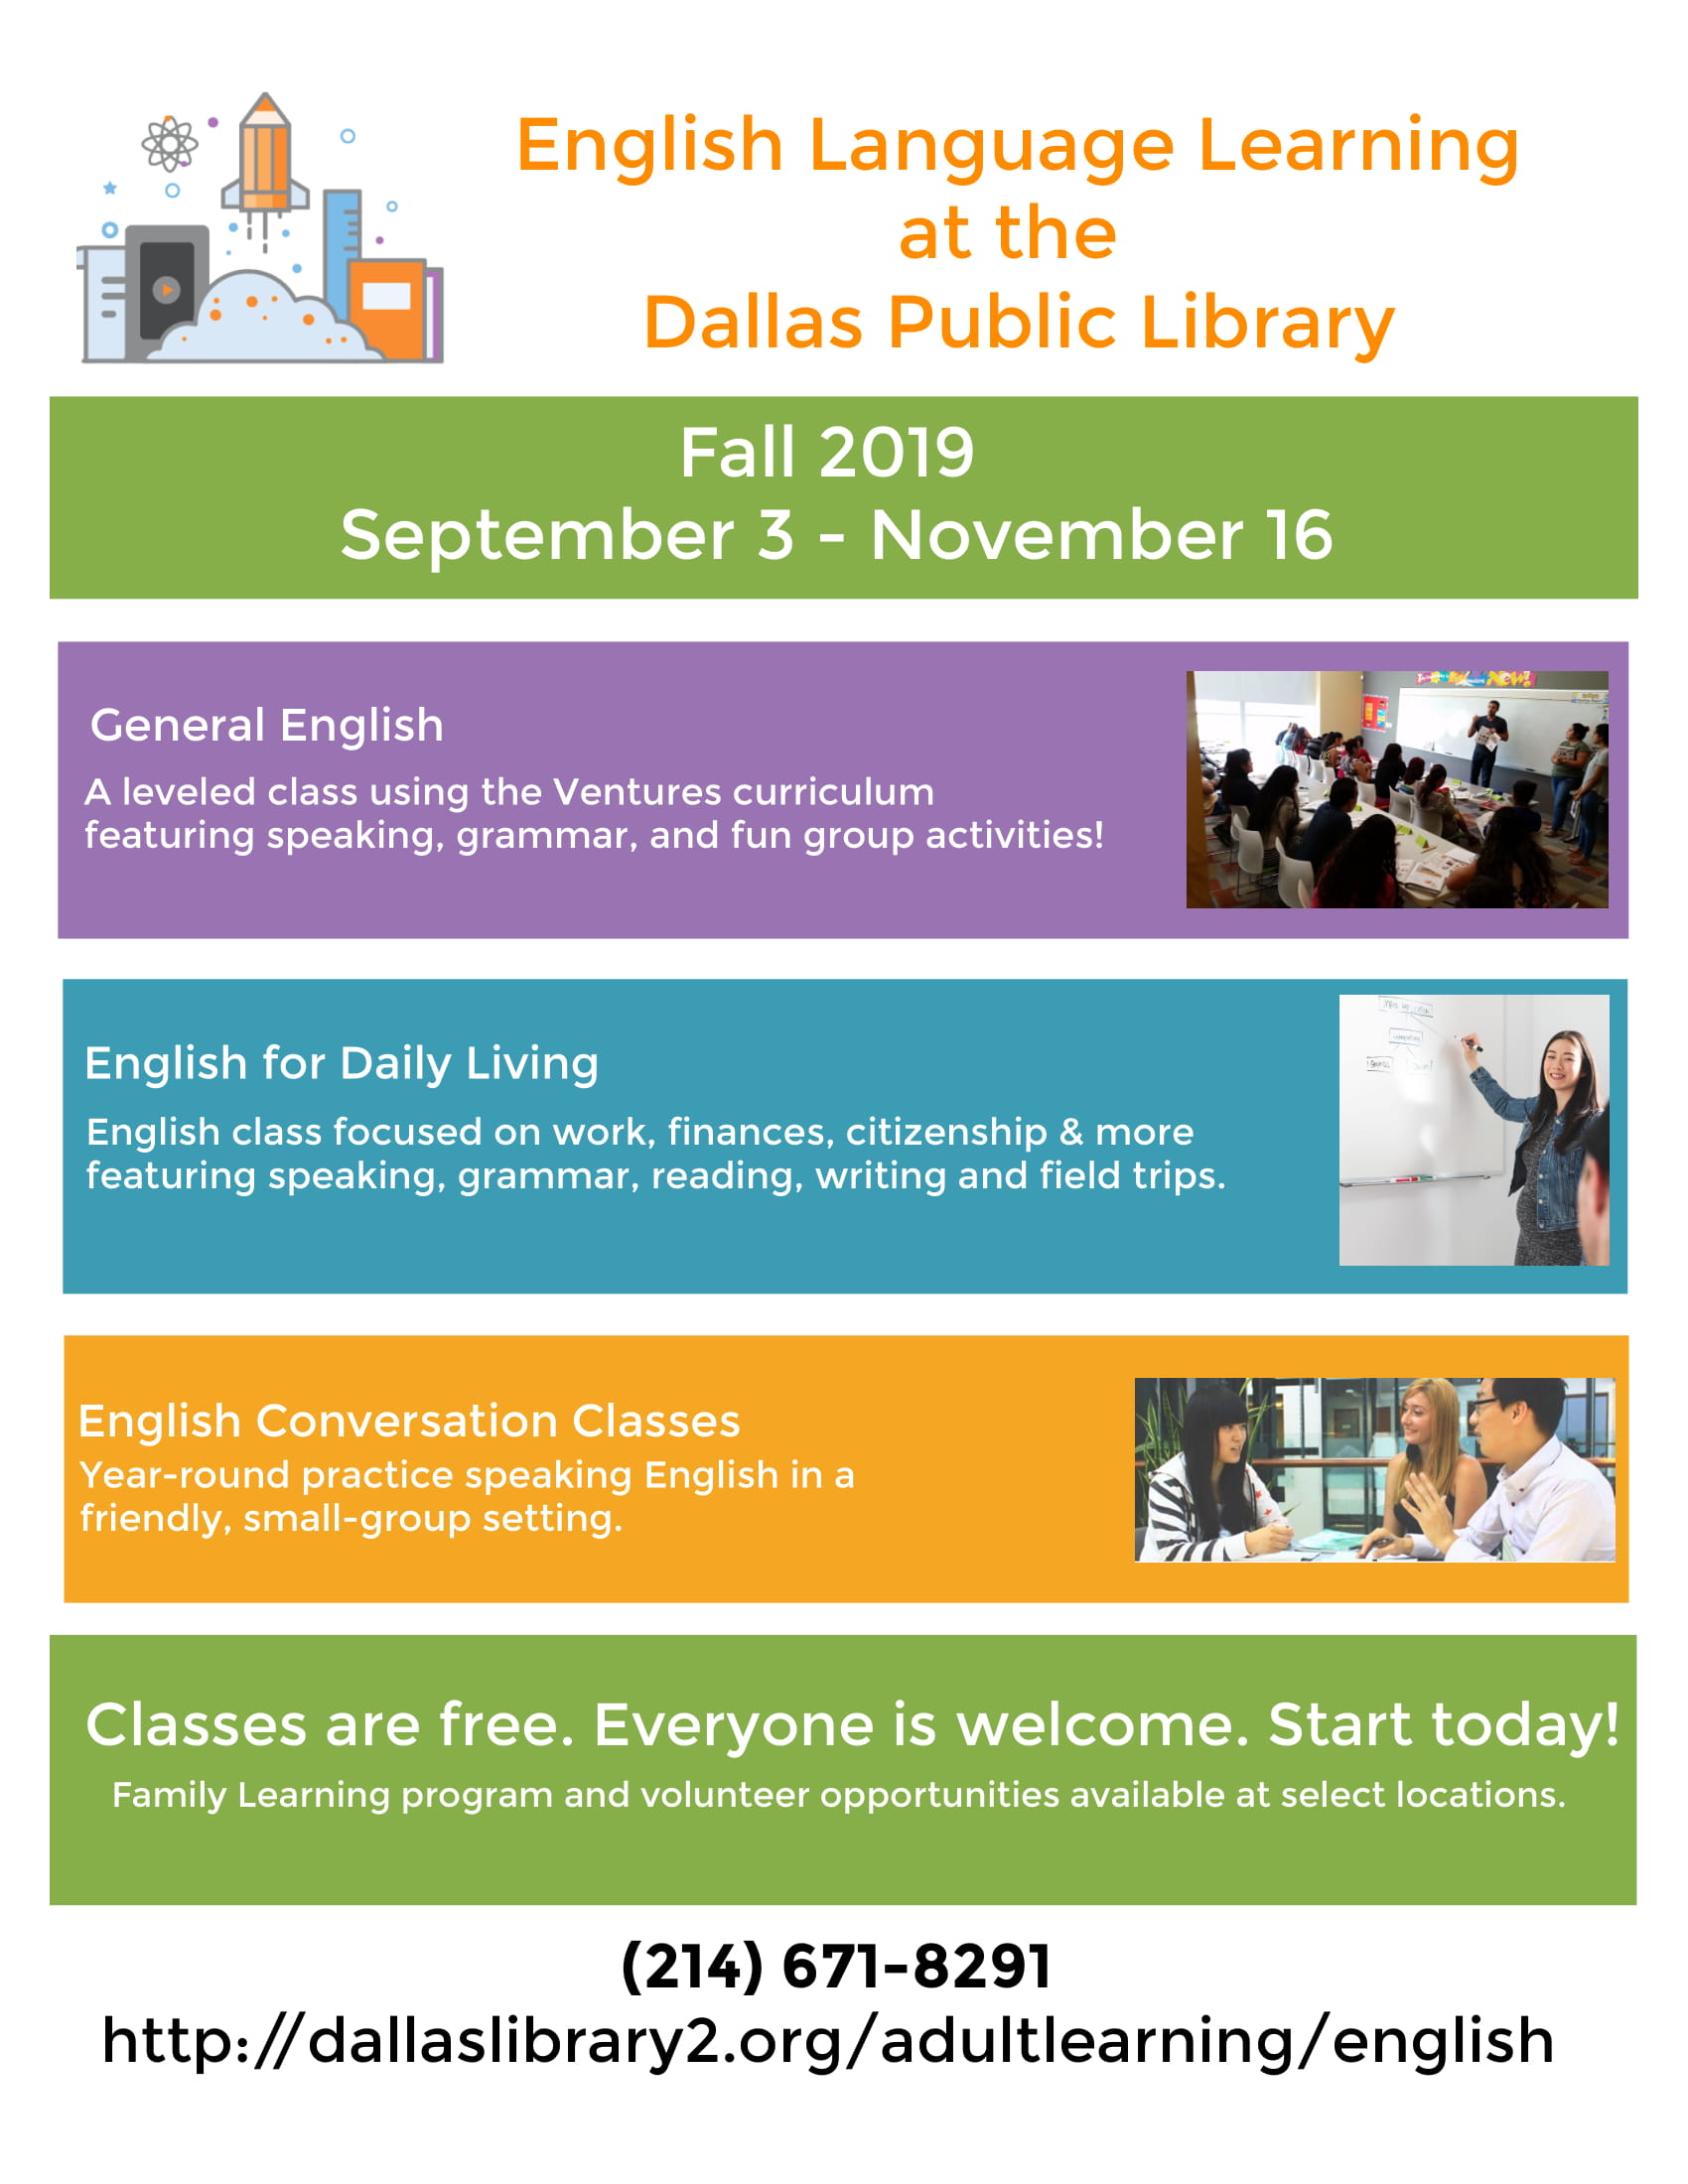 Fall 2019 English Classes: September 3 - November 16